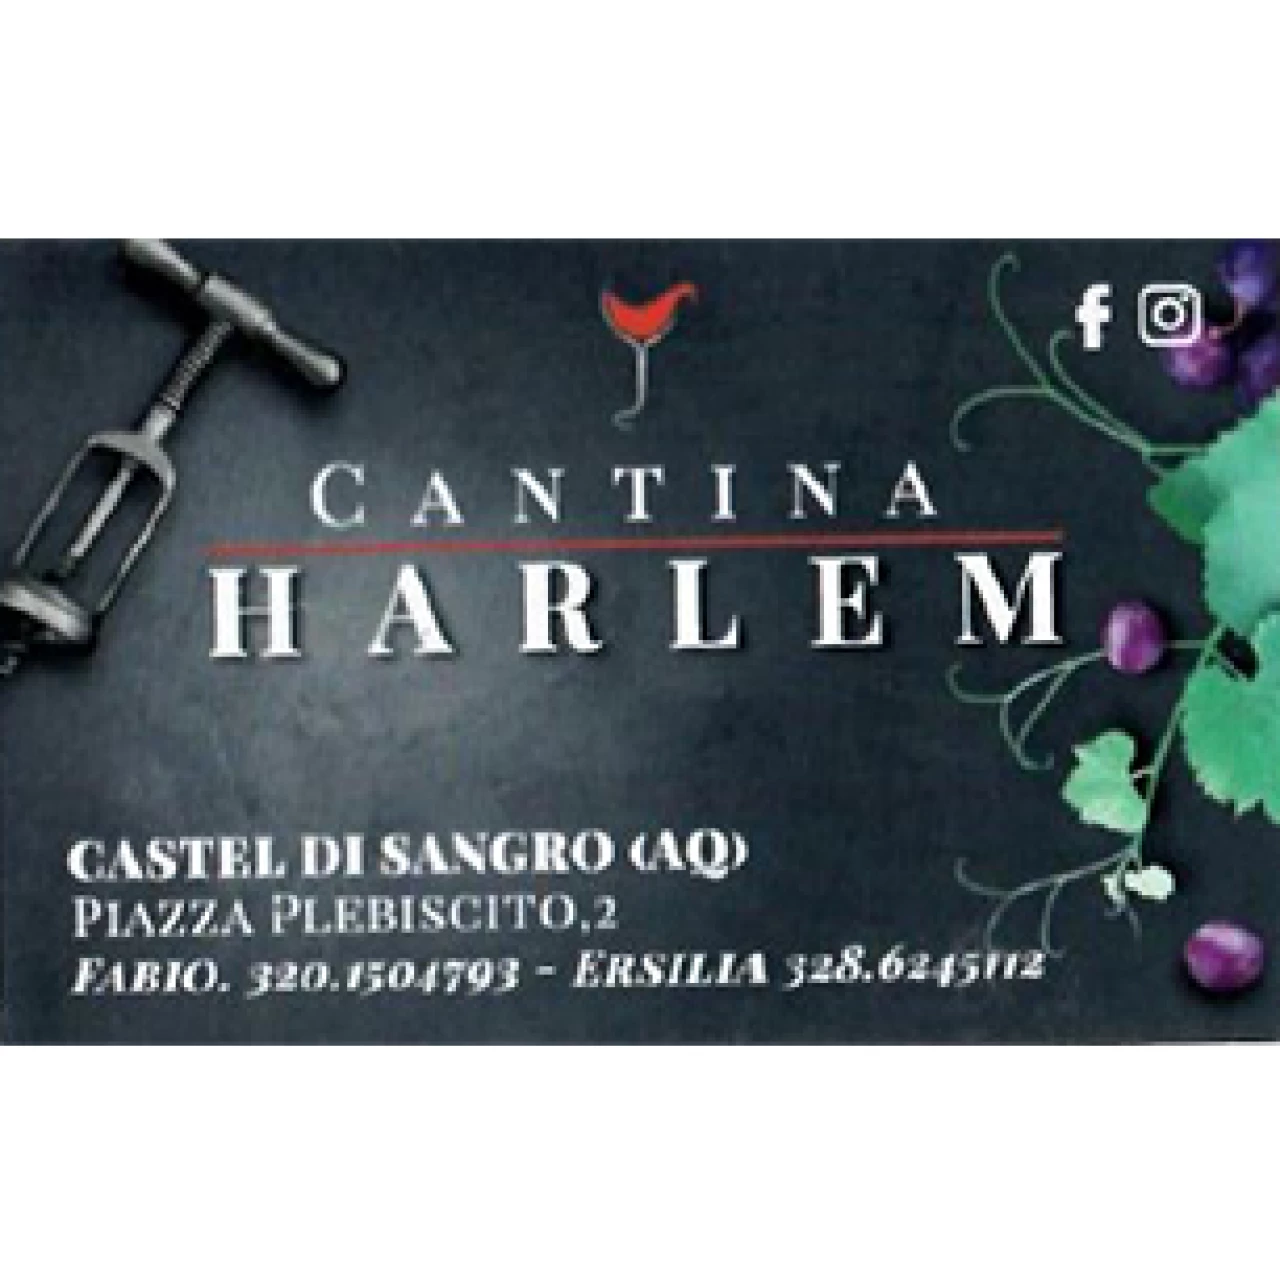 Banner Cantina Harlem Castel Di Sangro 306 per 306 pixel